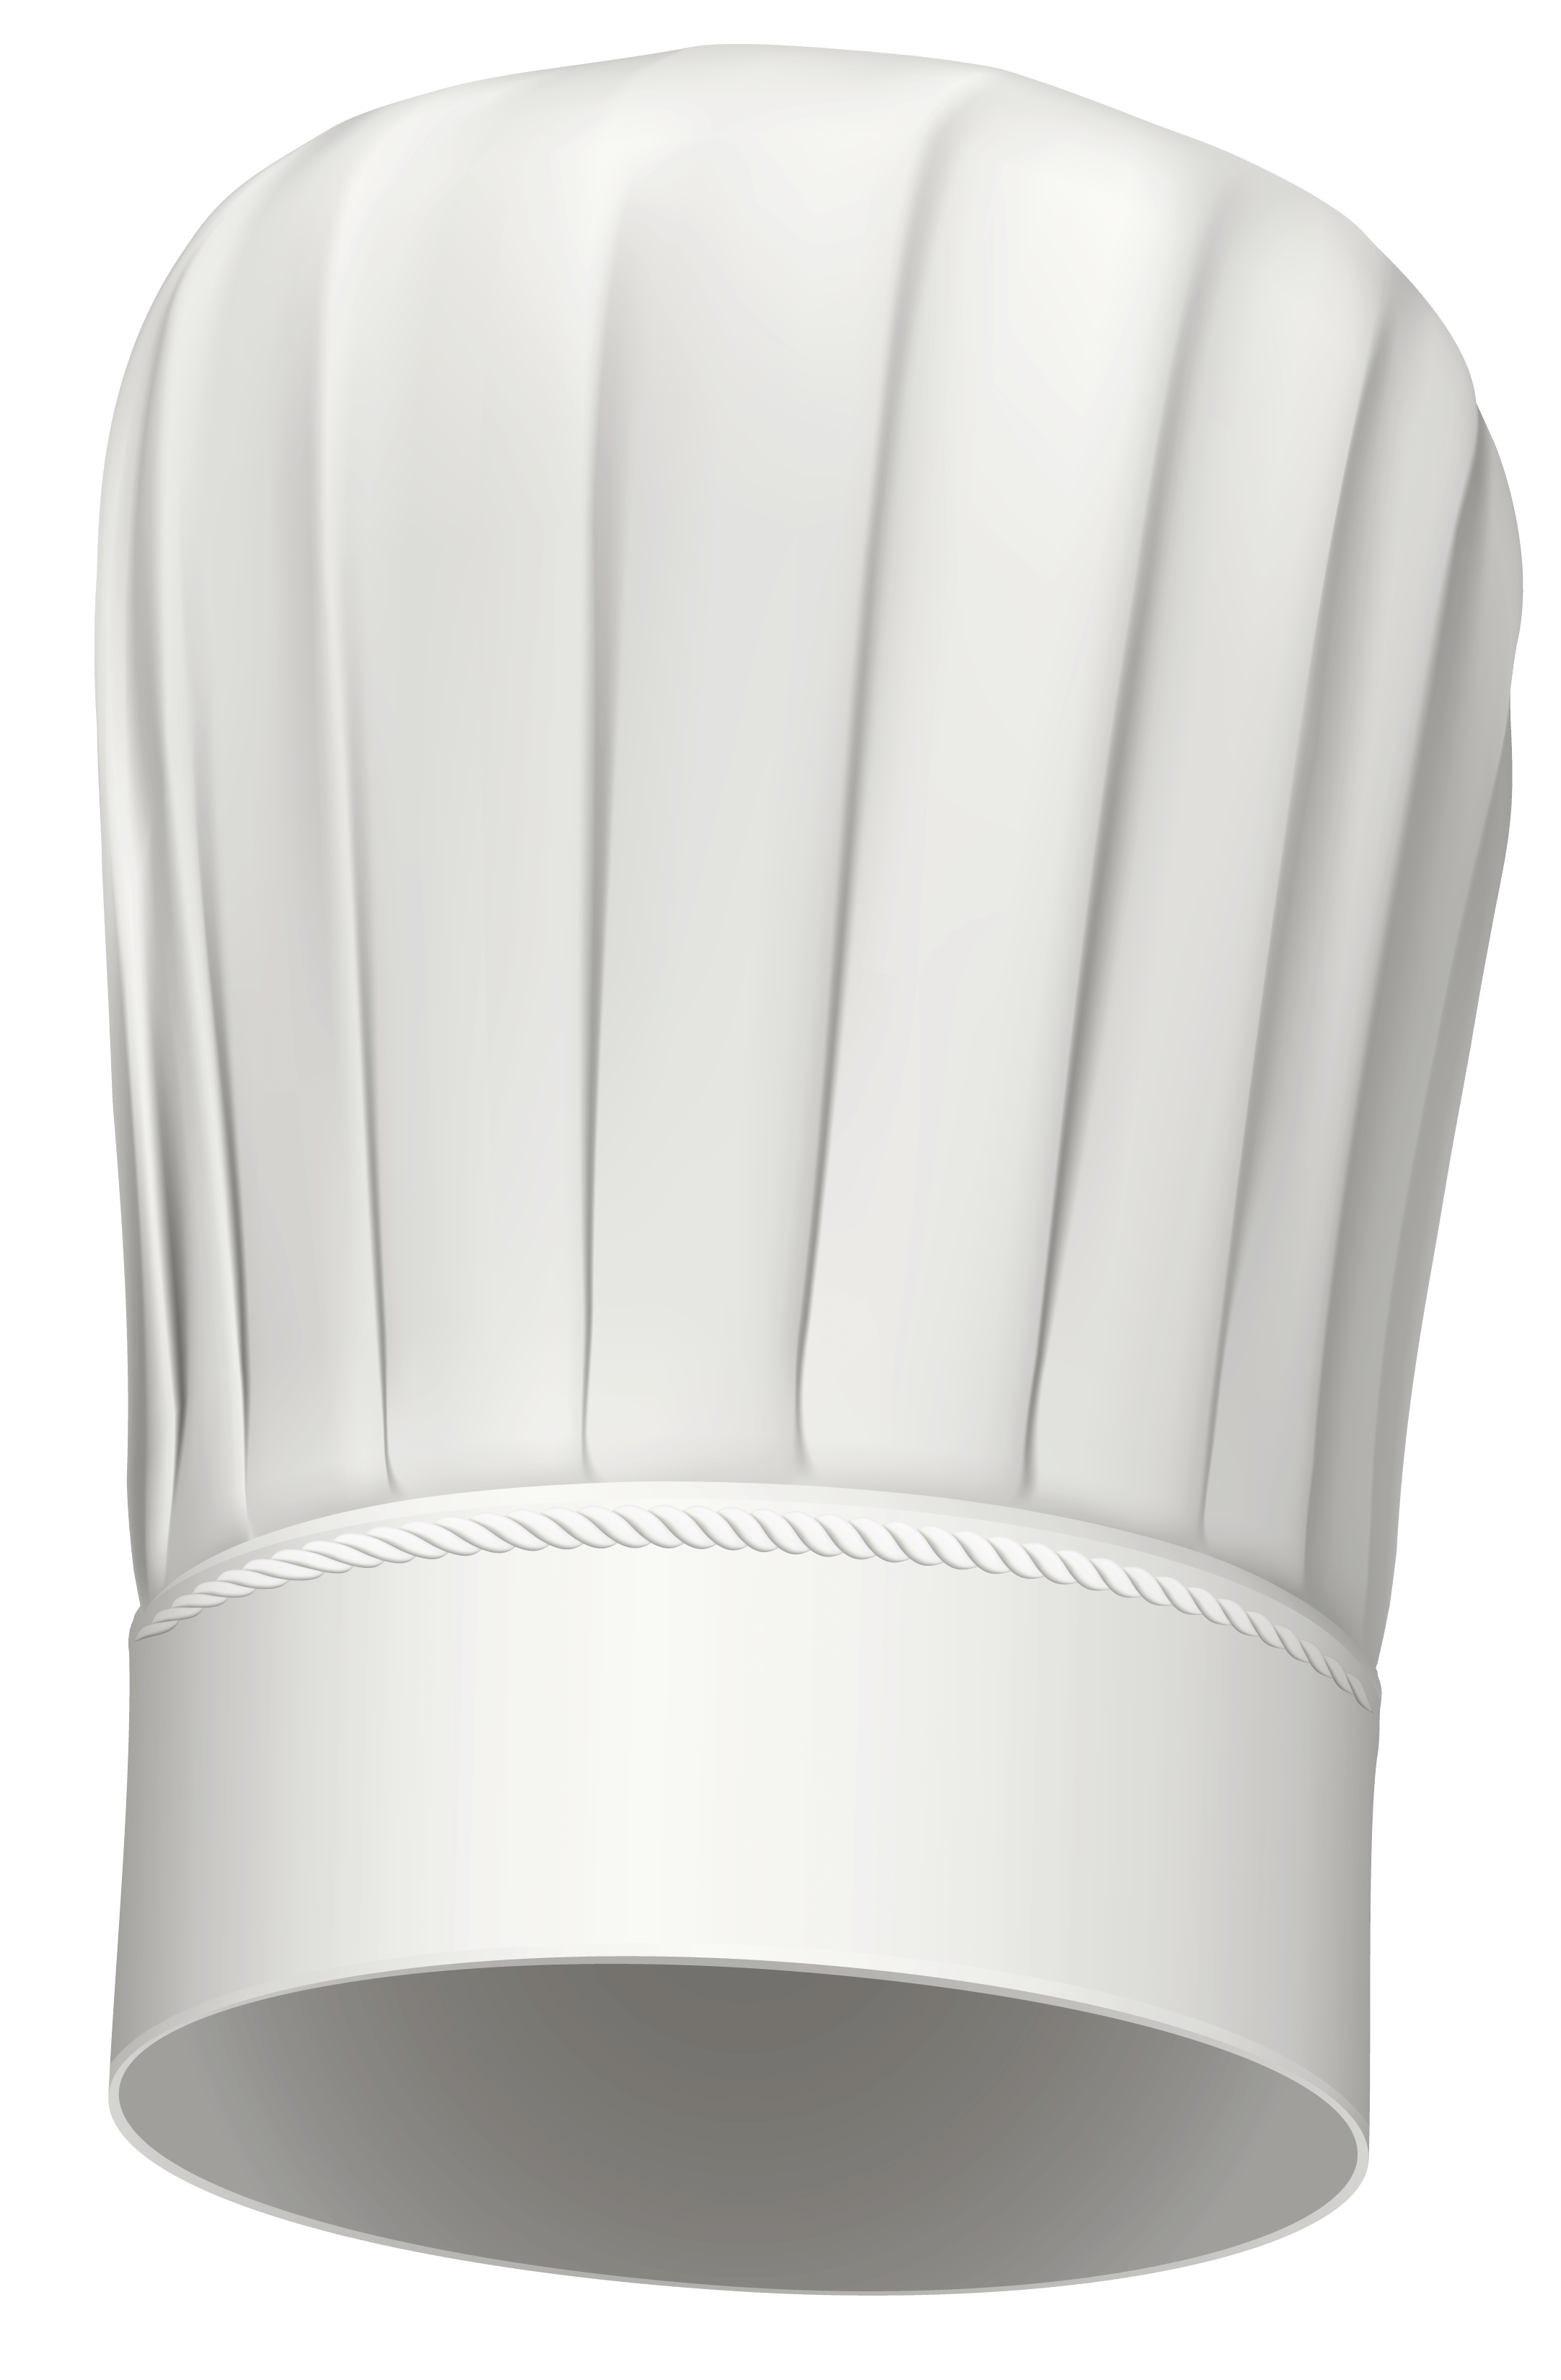 Download PNG image - Chef Hat PNG Transparent Image 